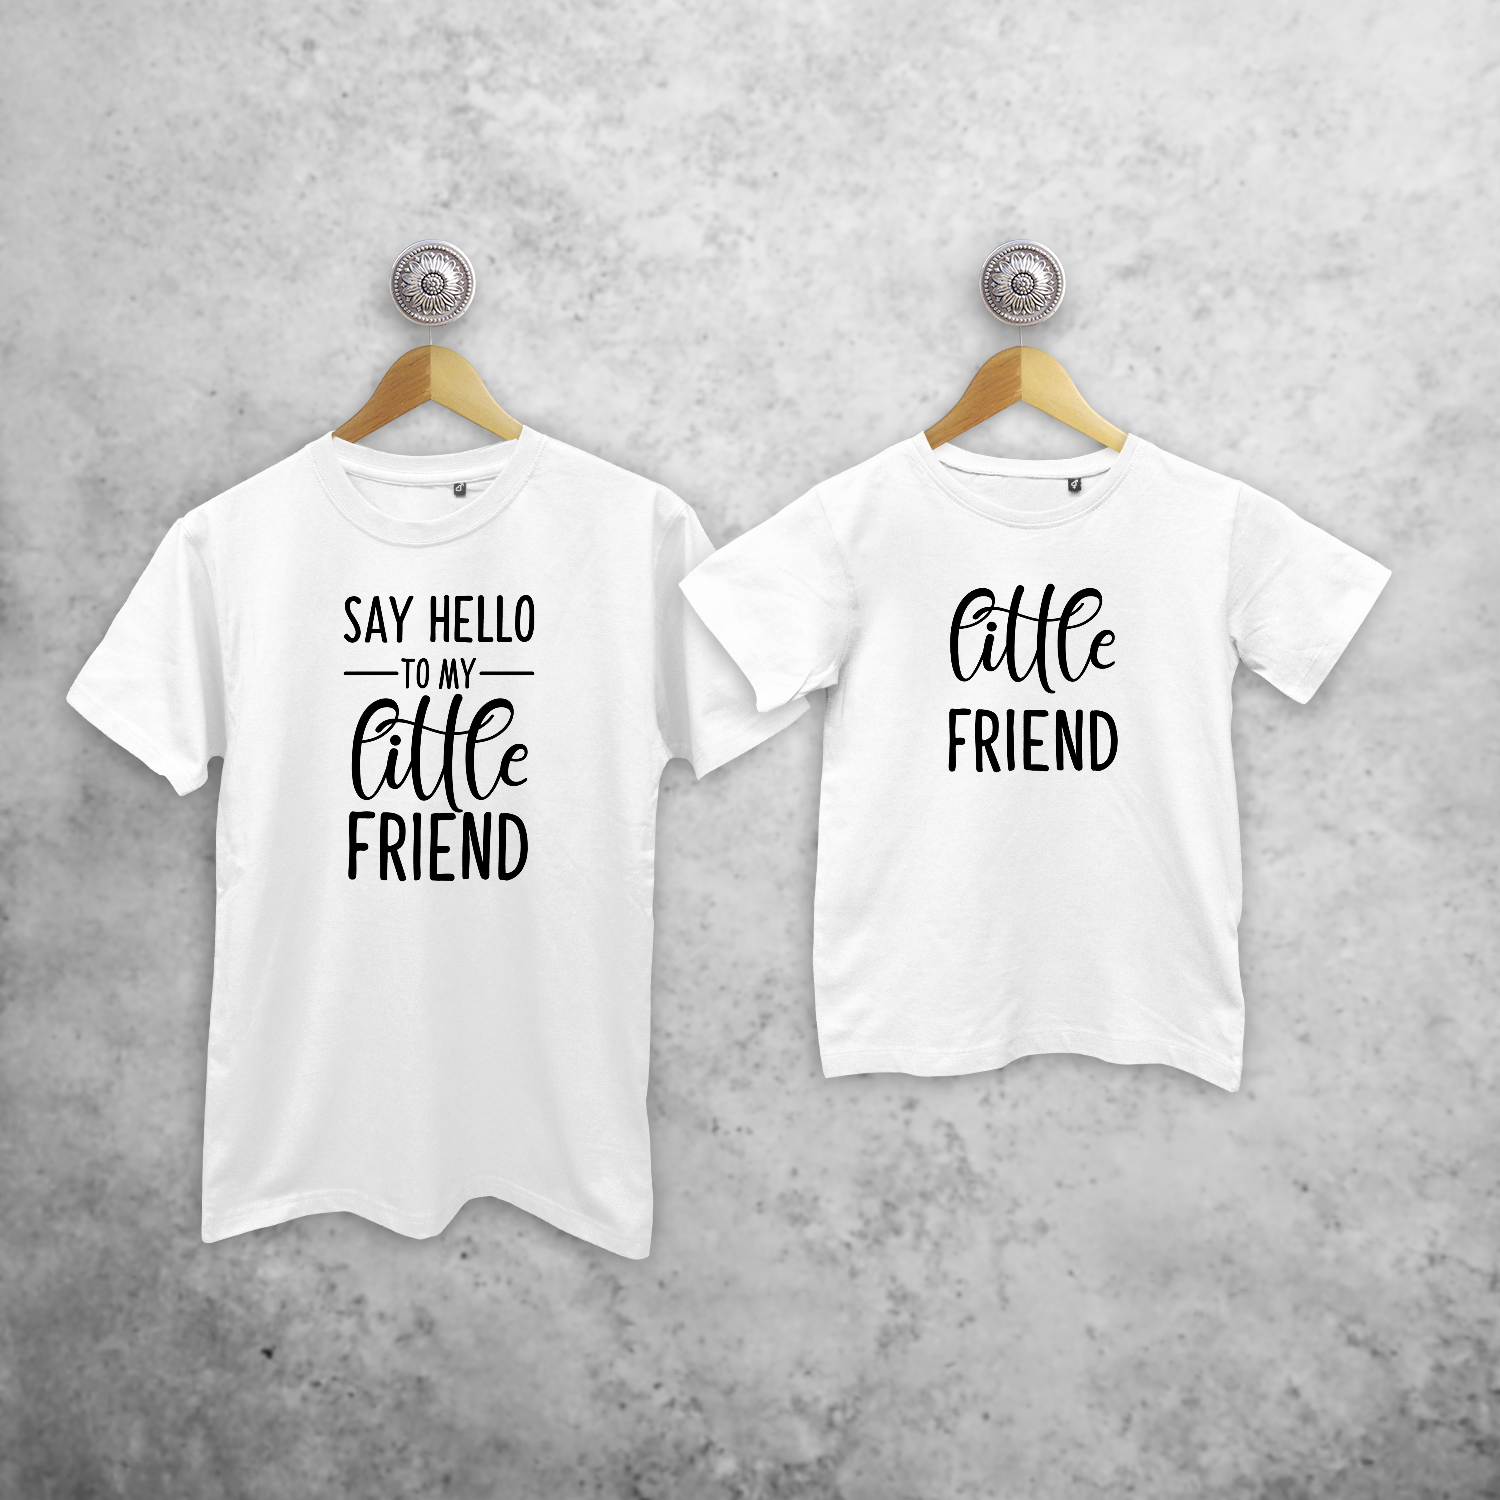 'Say hello to my little friend' & 'Little friend' matchende shirts